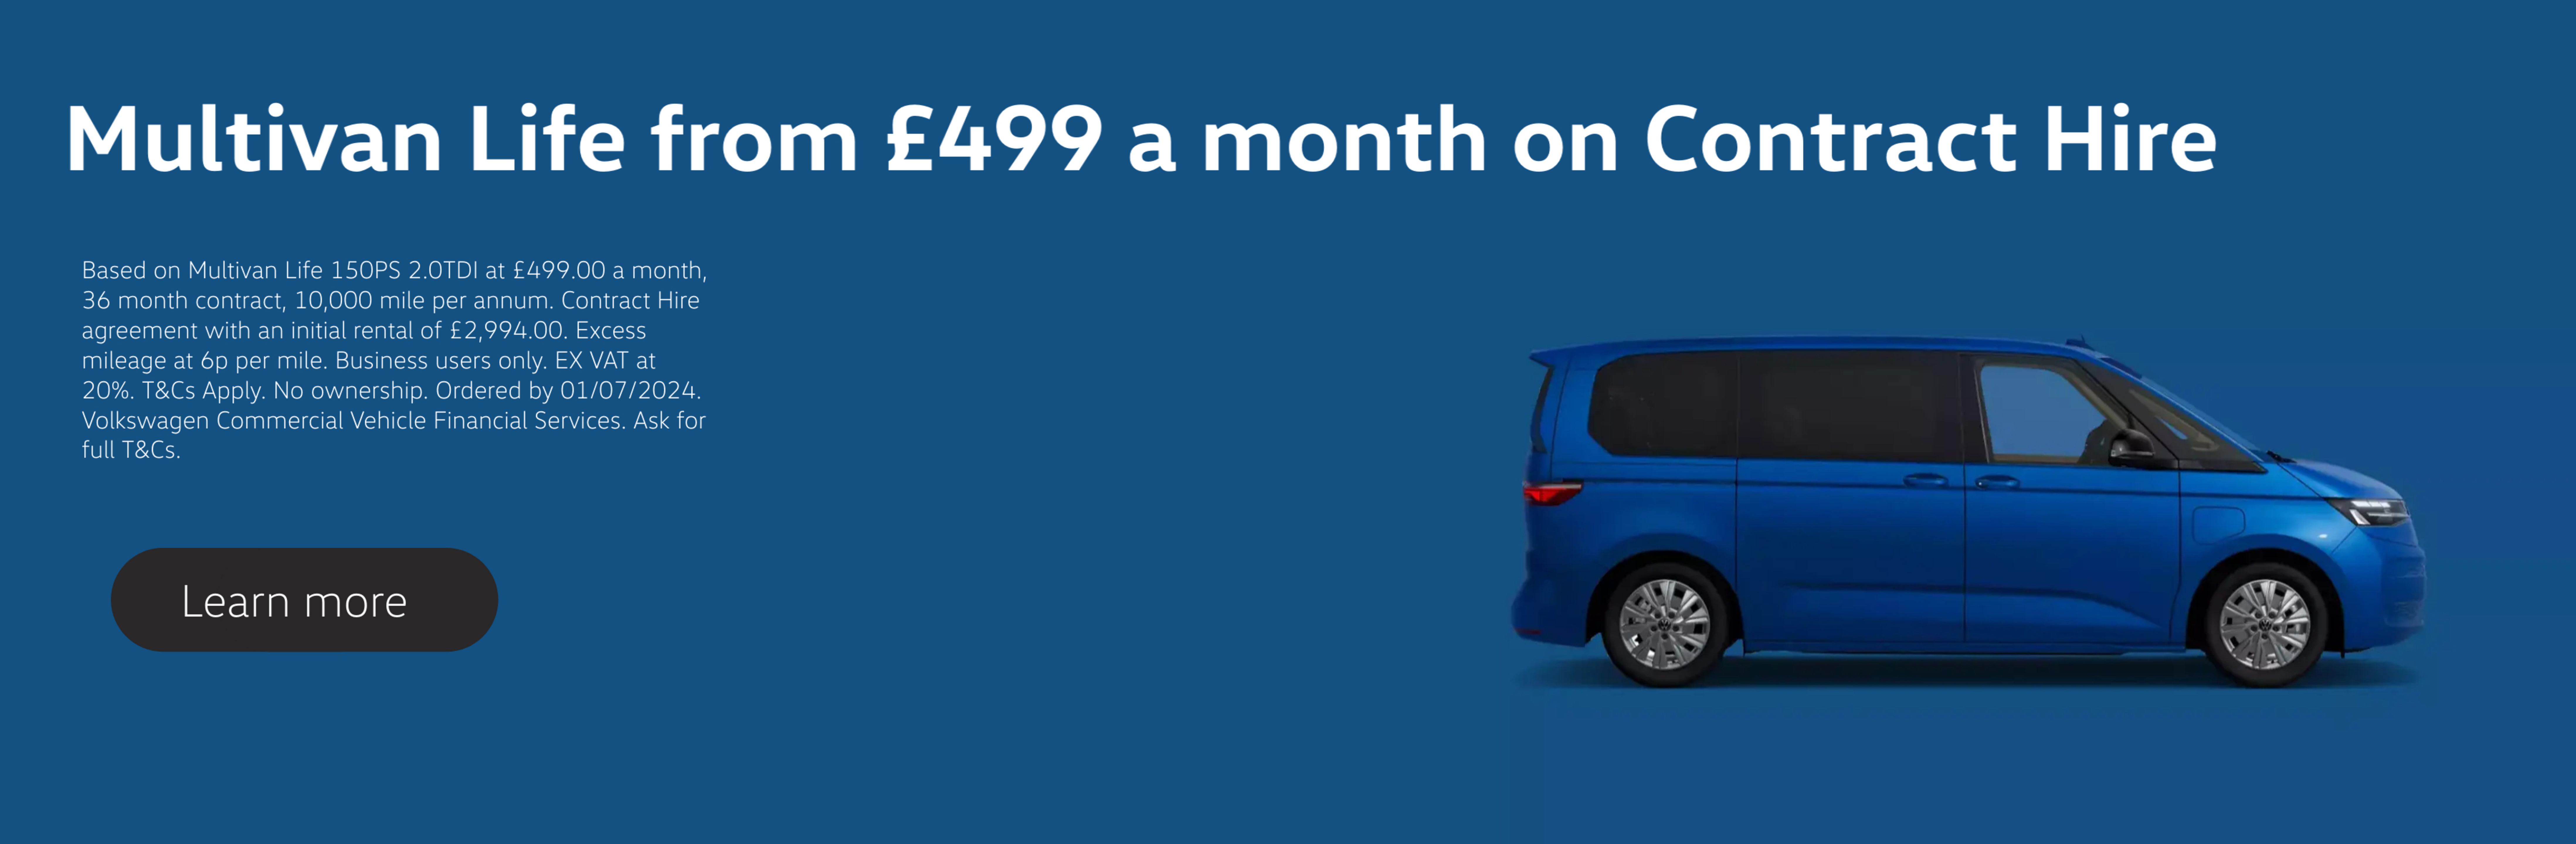 Multivan Offer £499